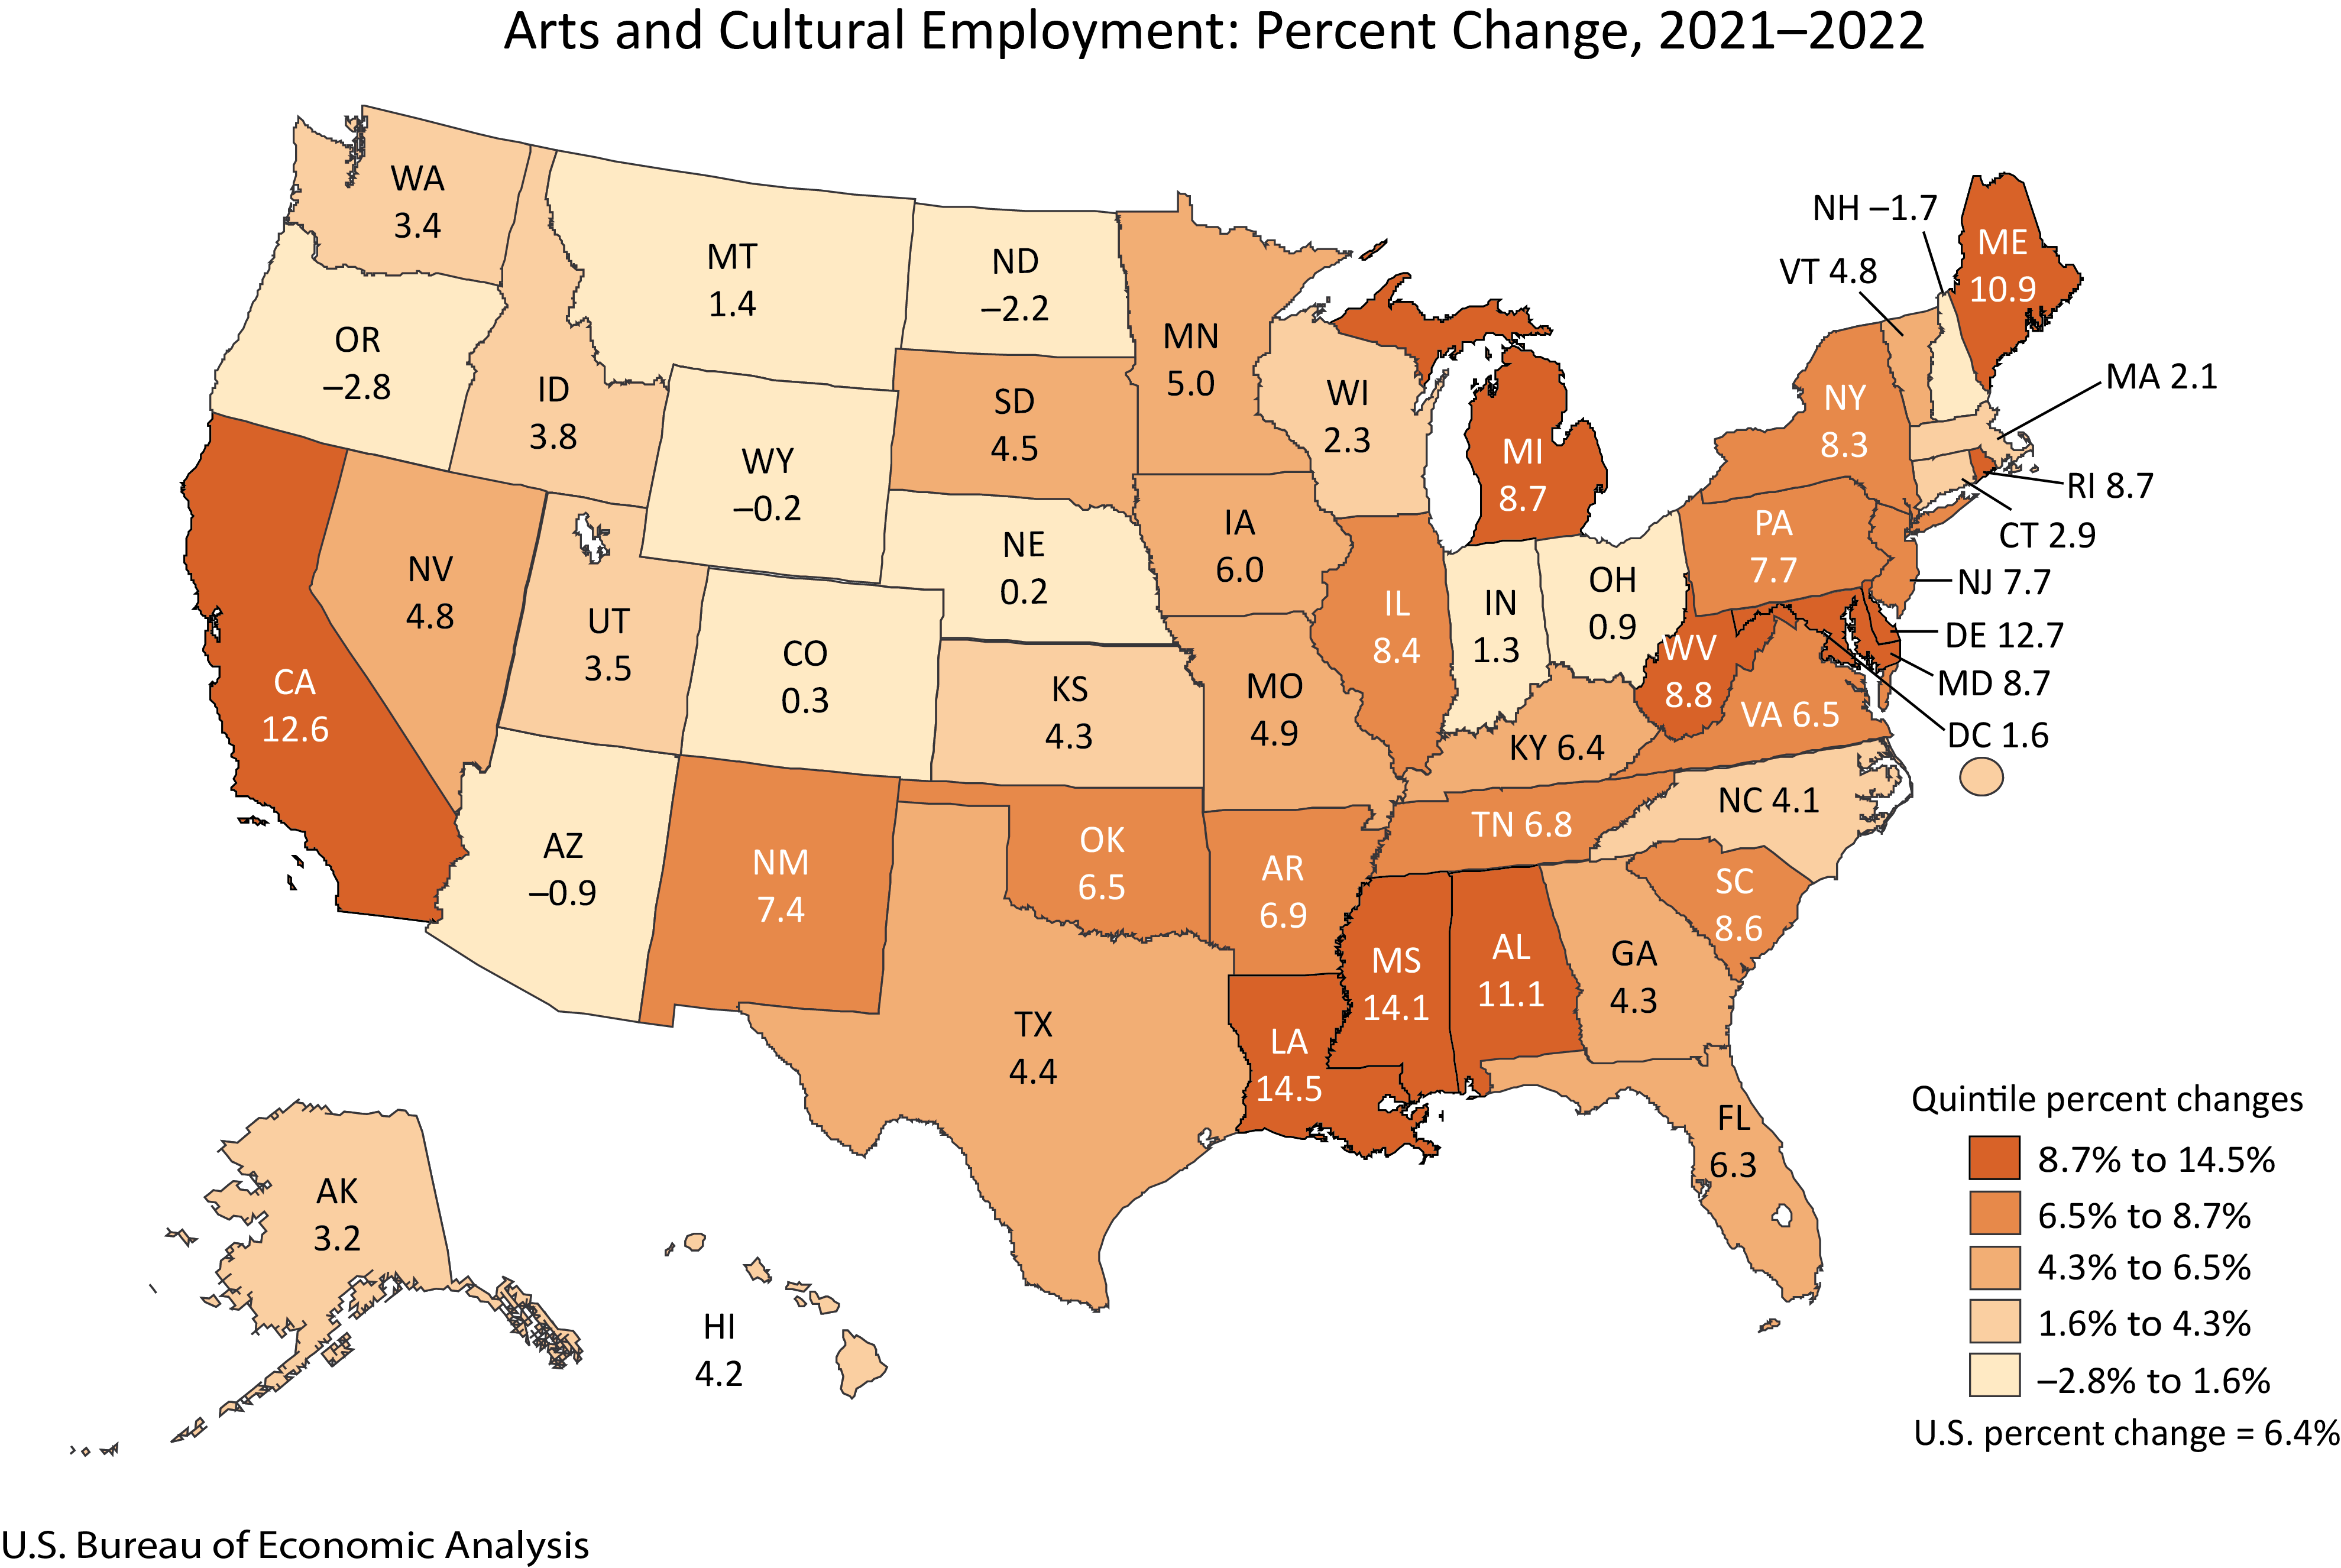 Arts and Cultural Employment: Percent Change 2021-2022